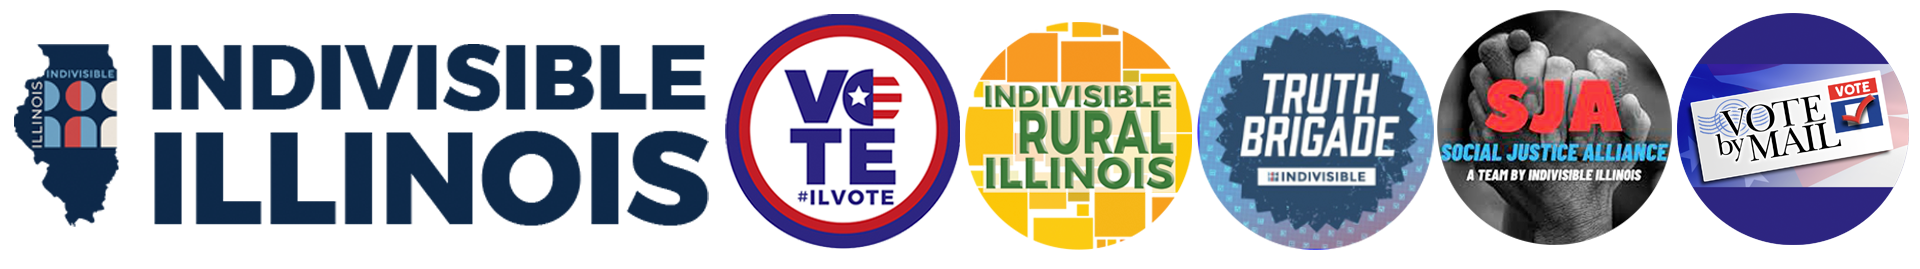 Indivisible Illinois coalition logo banner